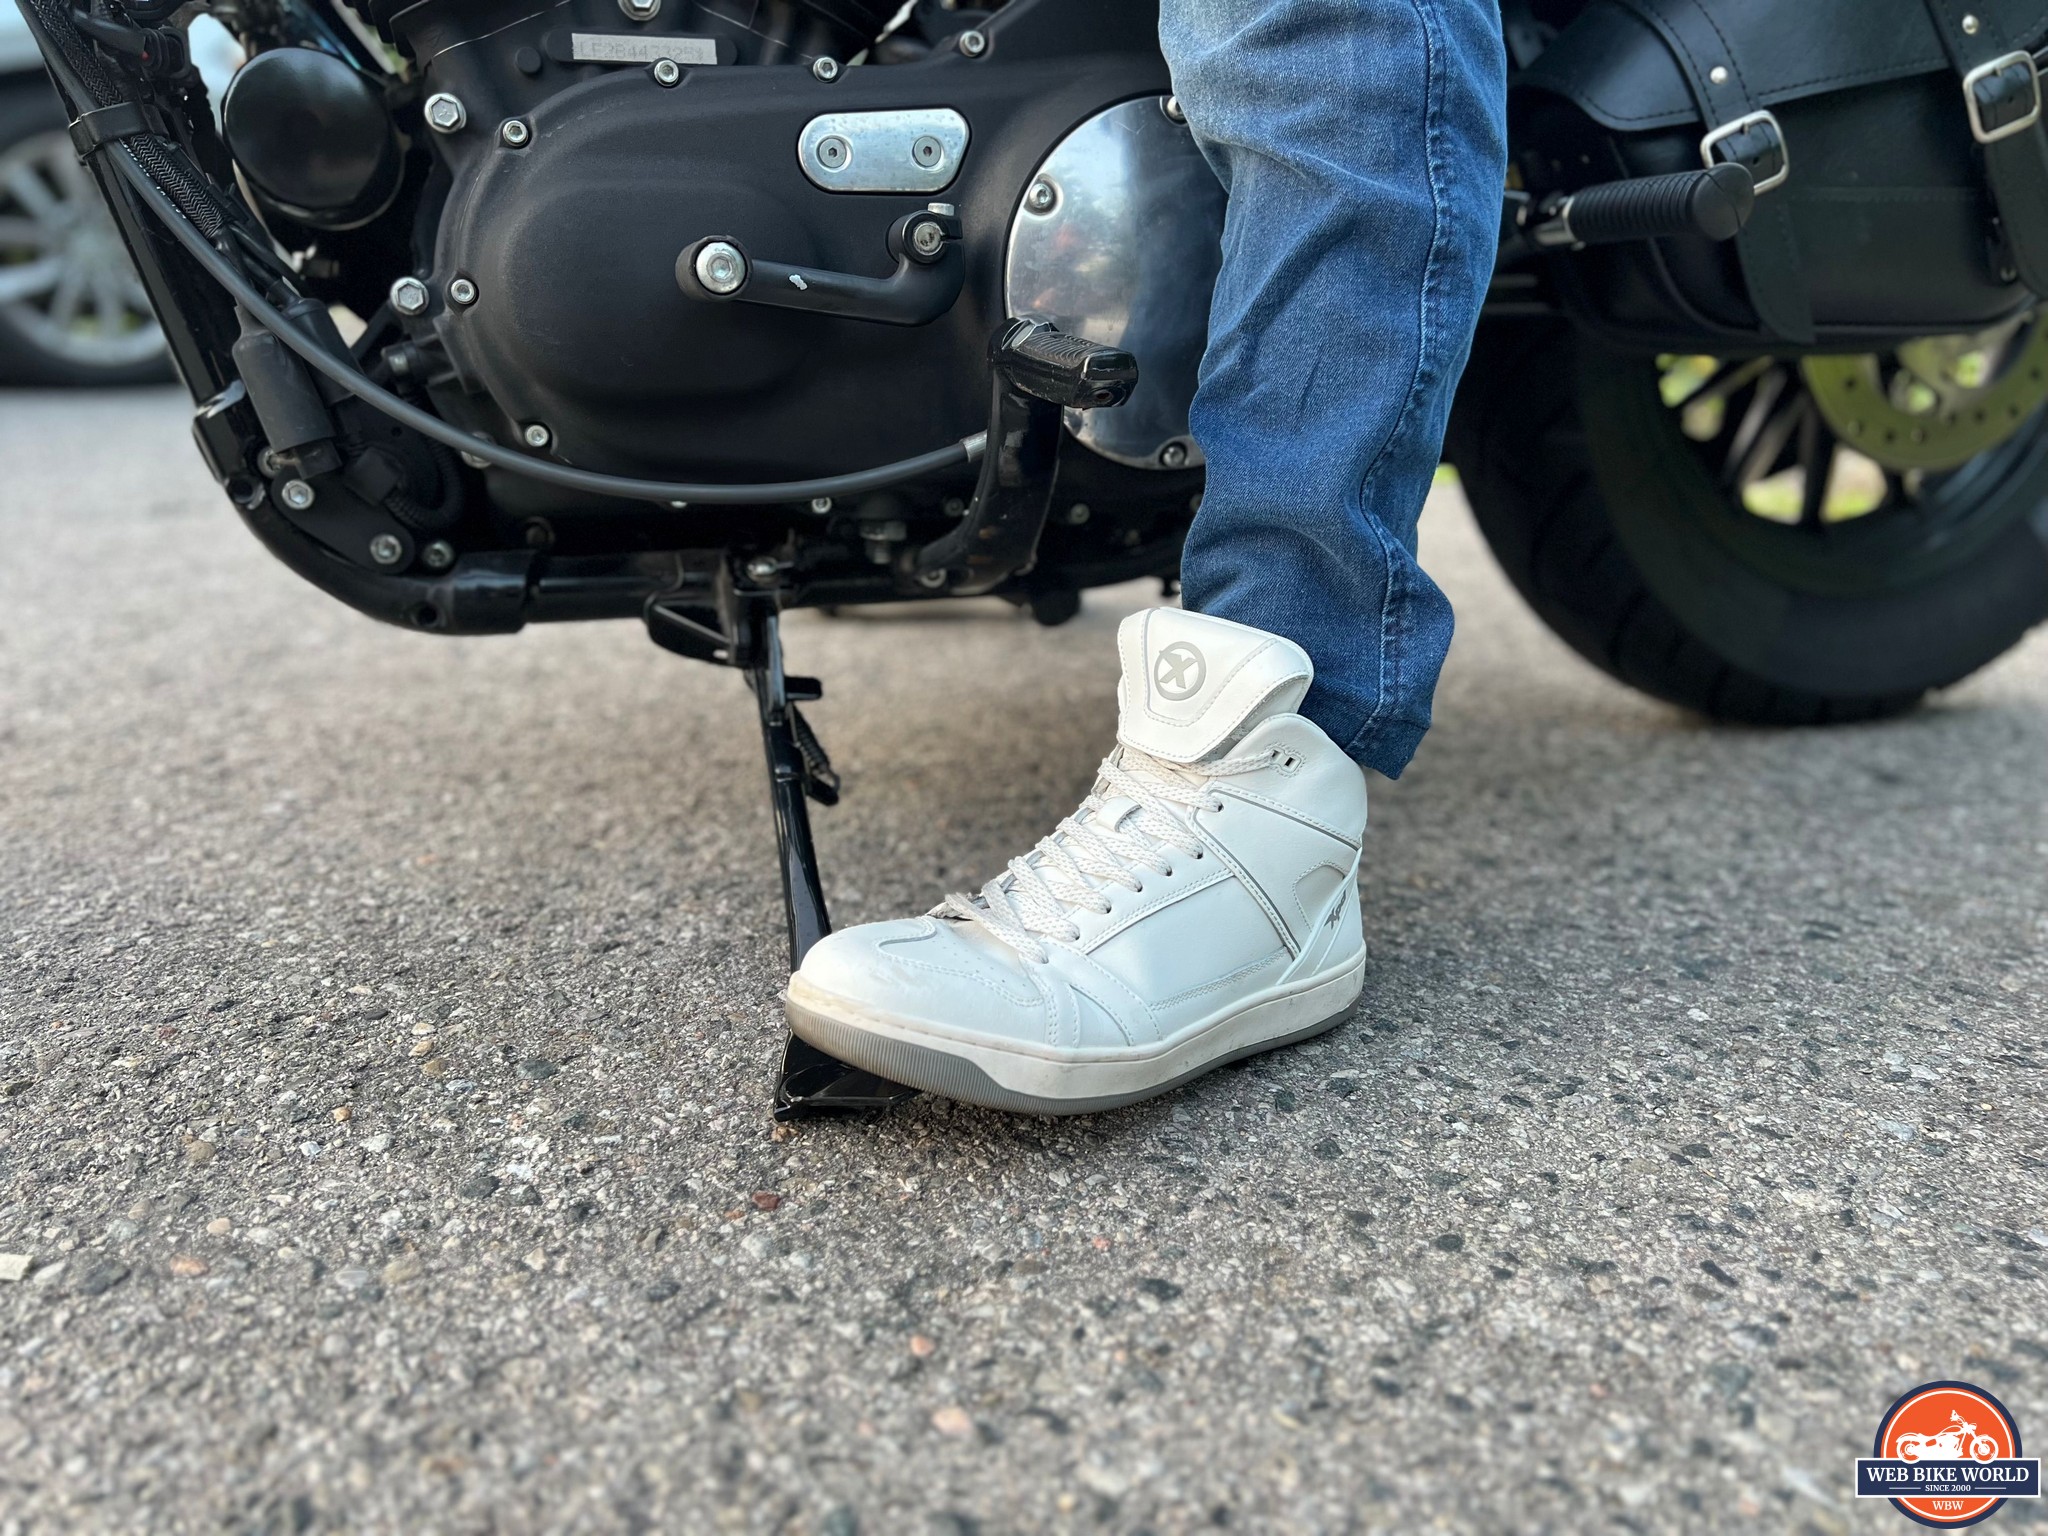 XPD Moto-1 Leather shoe on kickstand